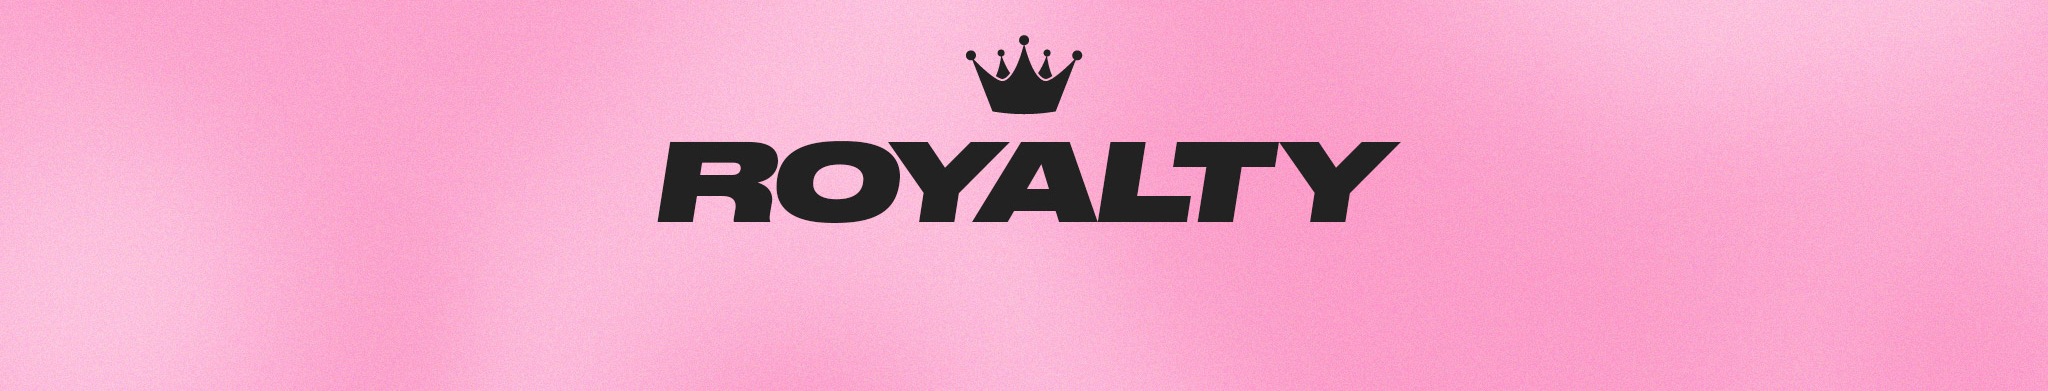 royalty logo